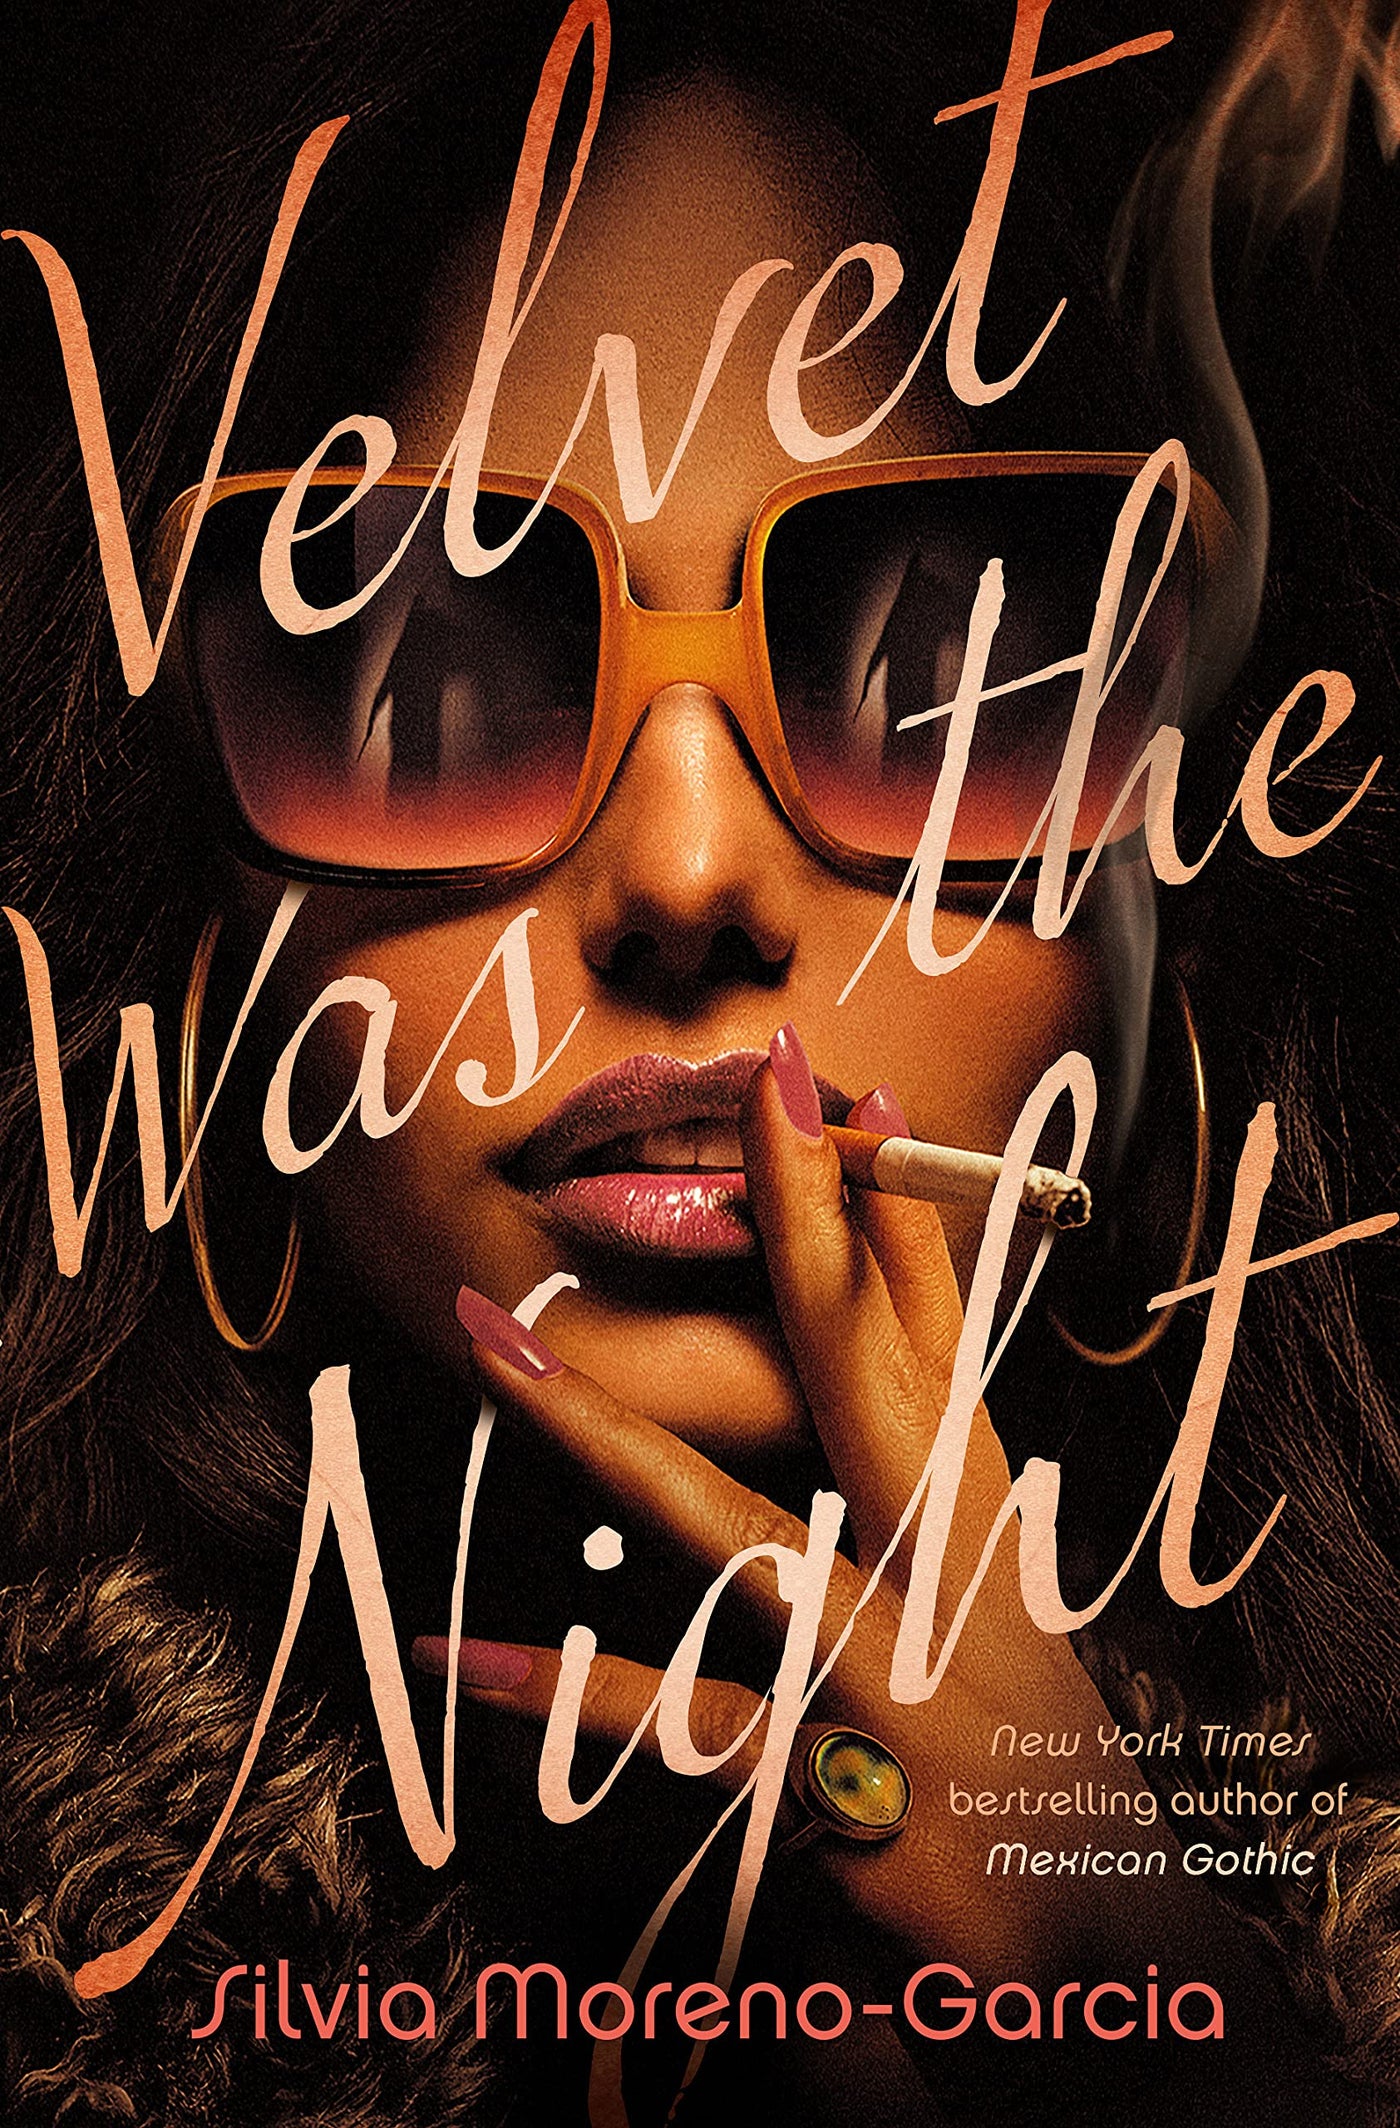 “Velvet Was the Night” by Silvia Moreno-Garcia